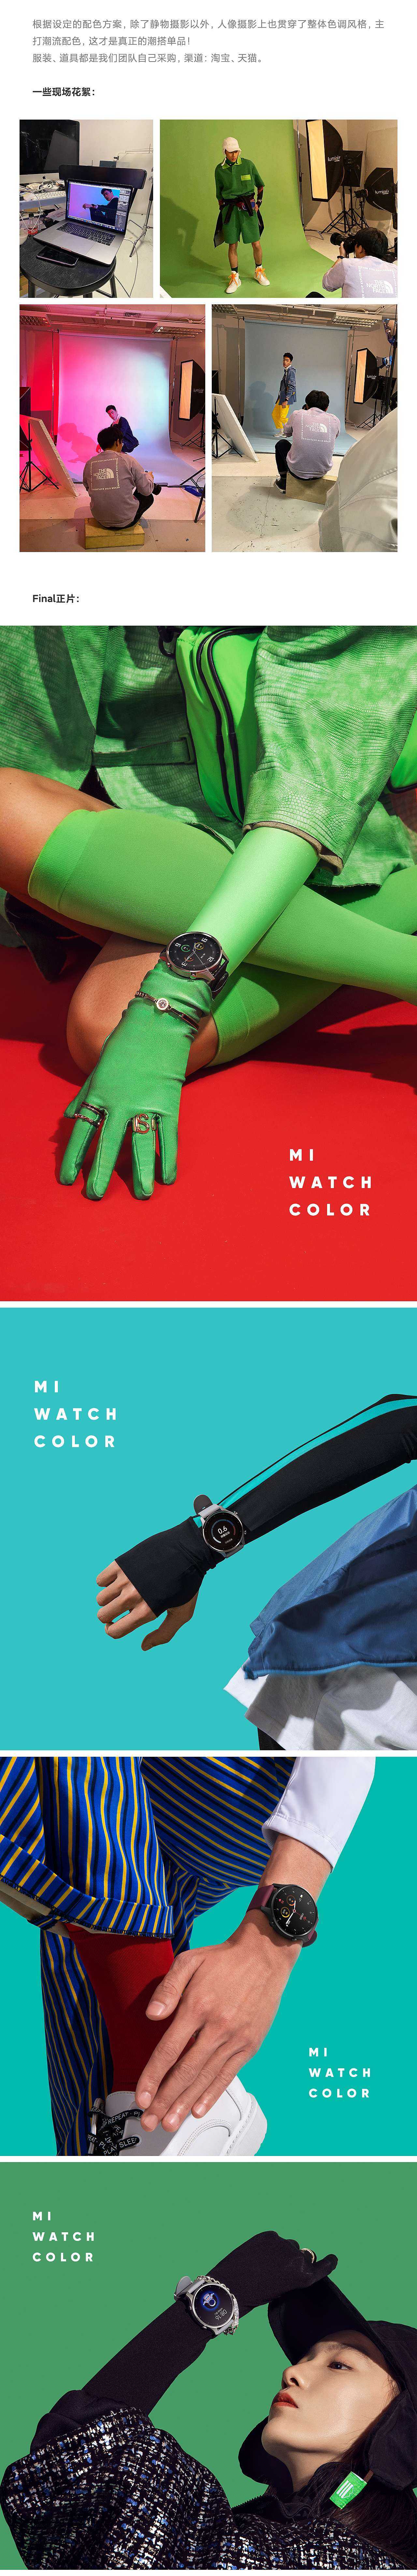 小米手表Color | 视觉整案